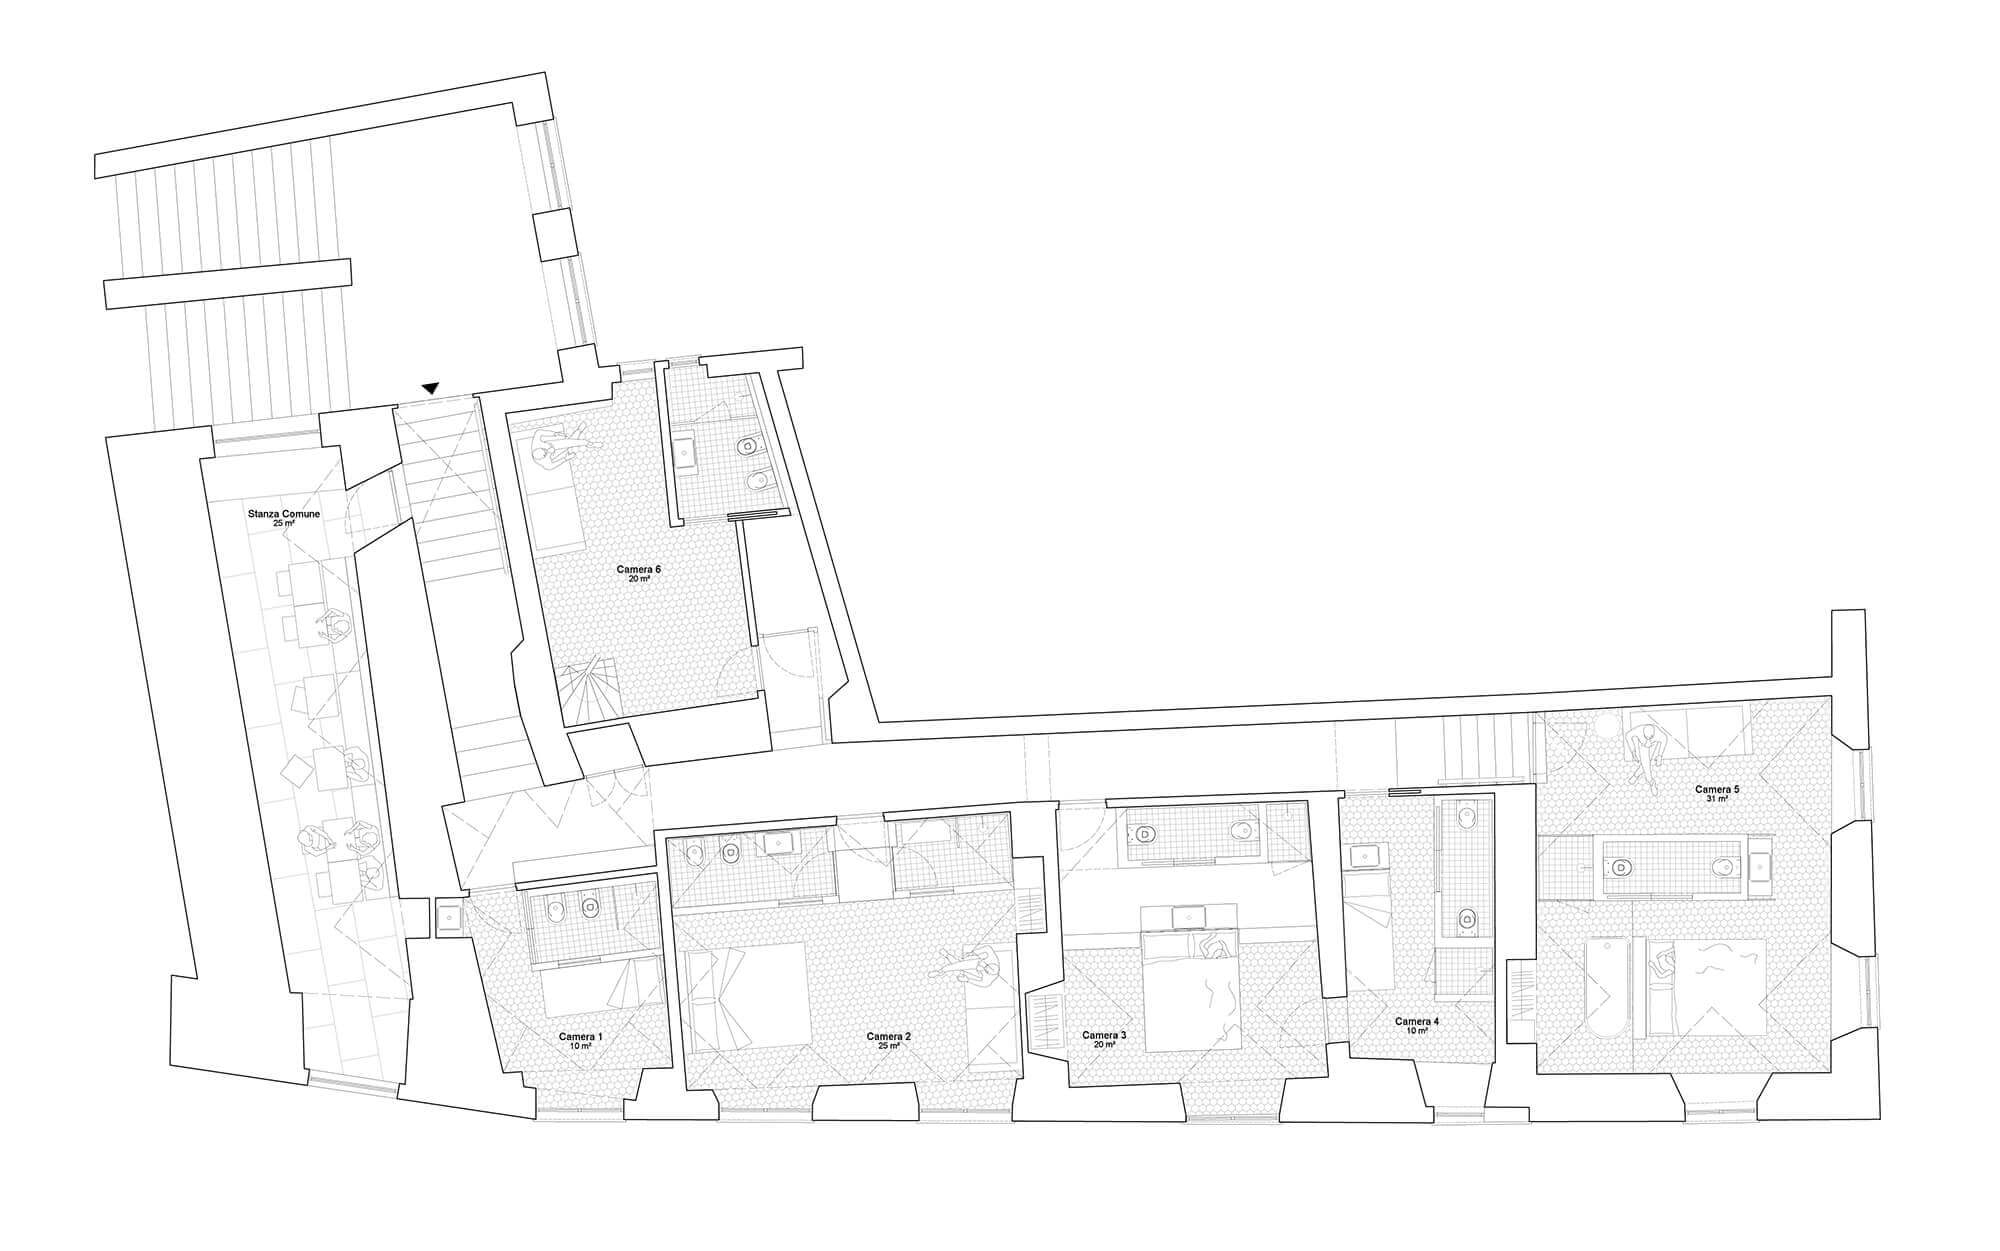 studio-d-architettura-B&B-palazzo-fabiani-planimetria